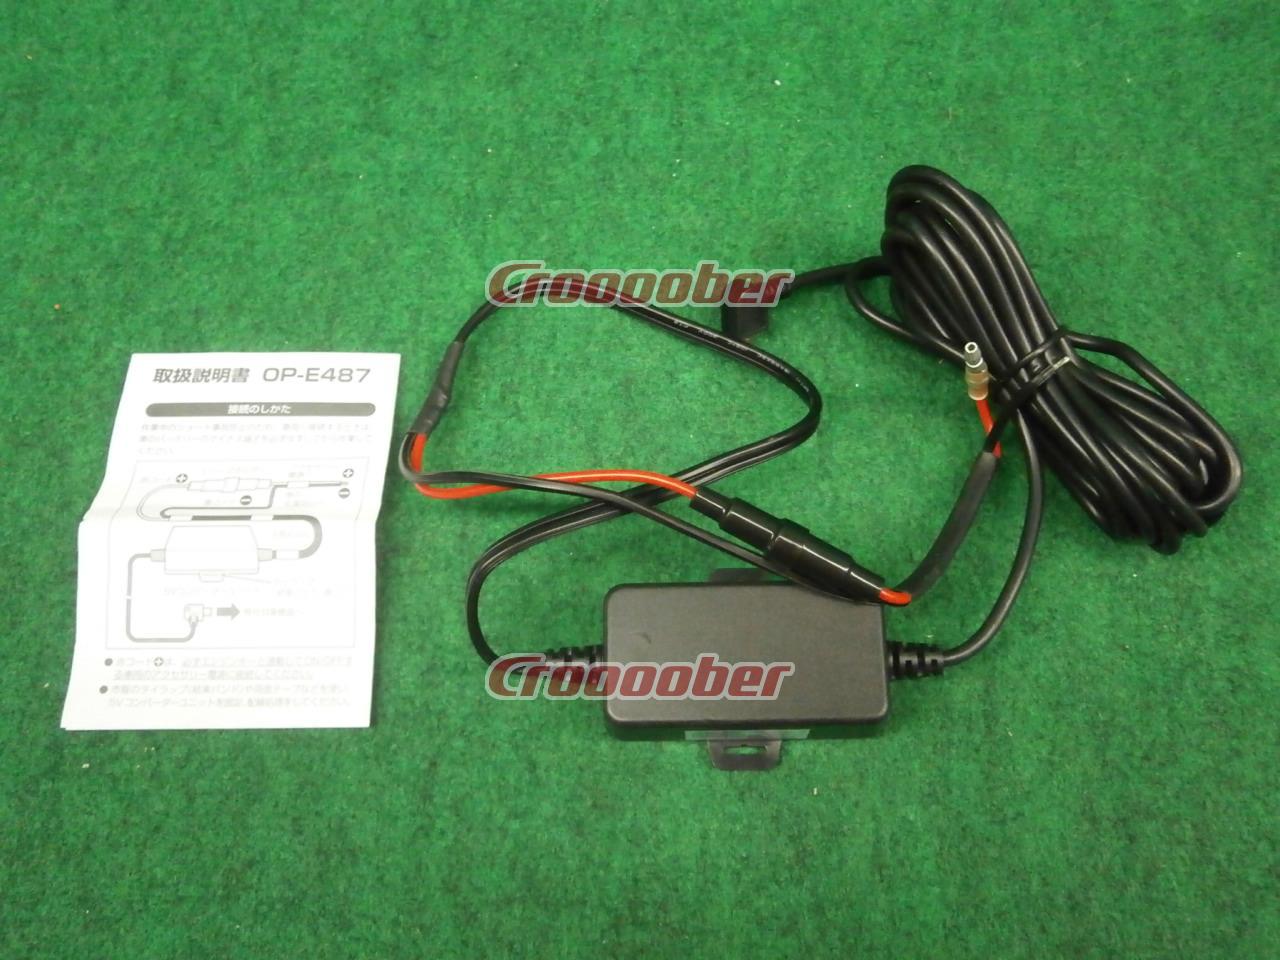 YUPITERU(ユピテル) USB電源直結コード OP-E487 | 電装系 レーダー探知機パーツの通販なら | Croooober(クルーバー)